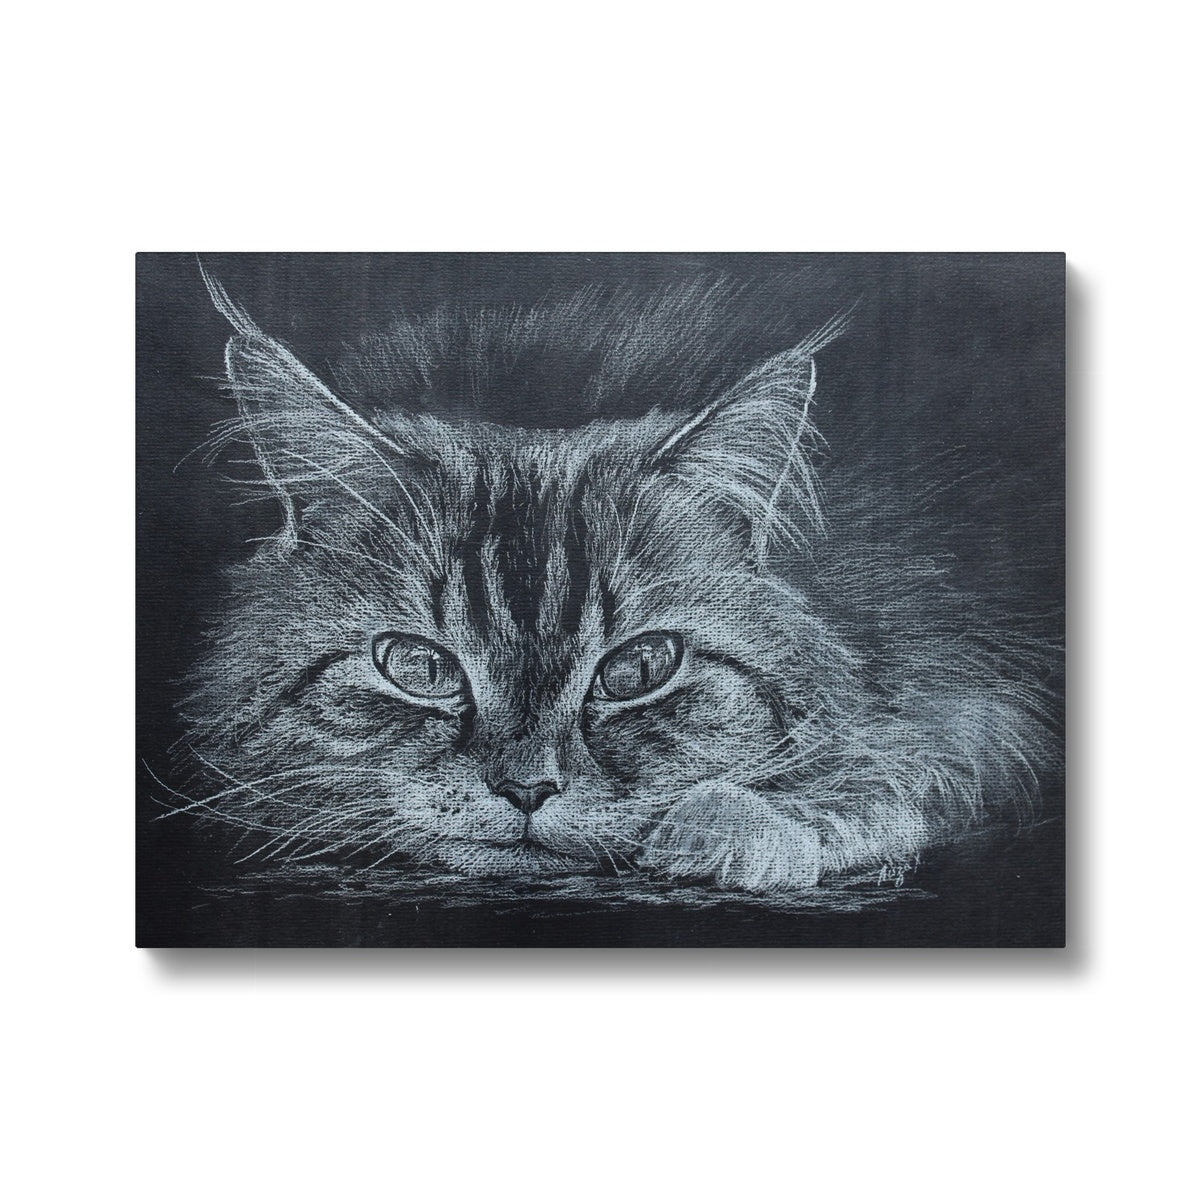 Black & White Chalk Sketch Of Cat Canvas